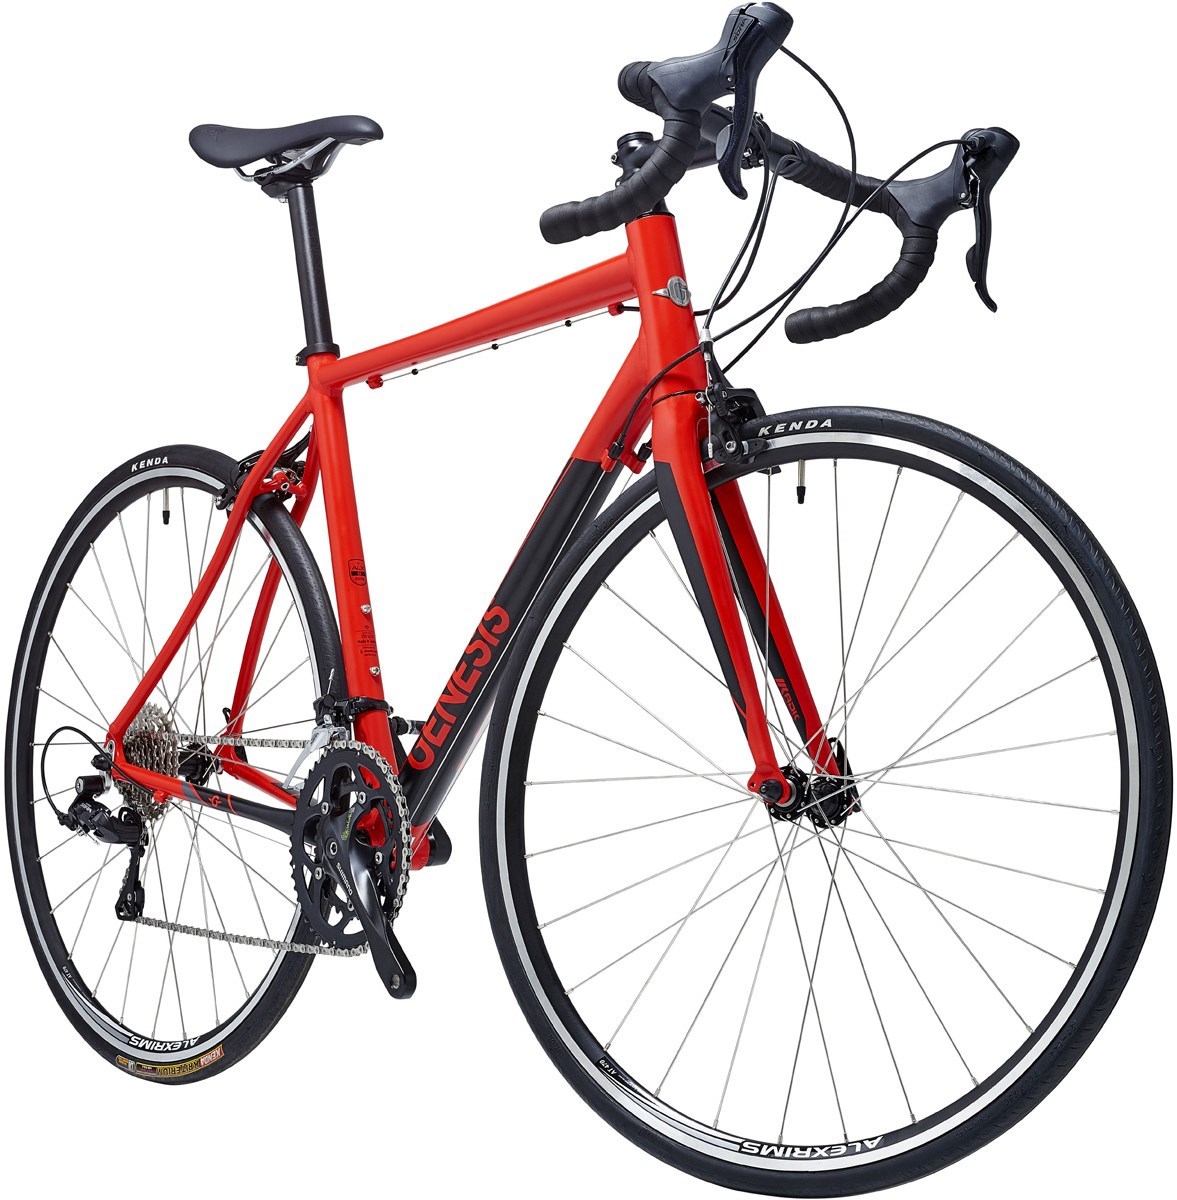 Genesis Delta 10 2016 Road Bike